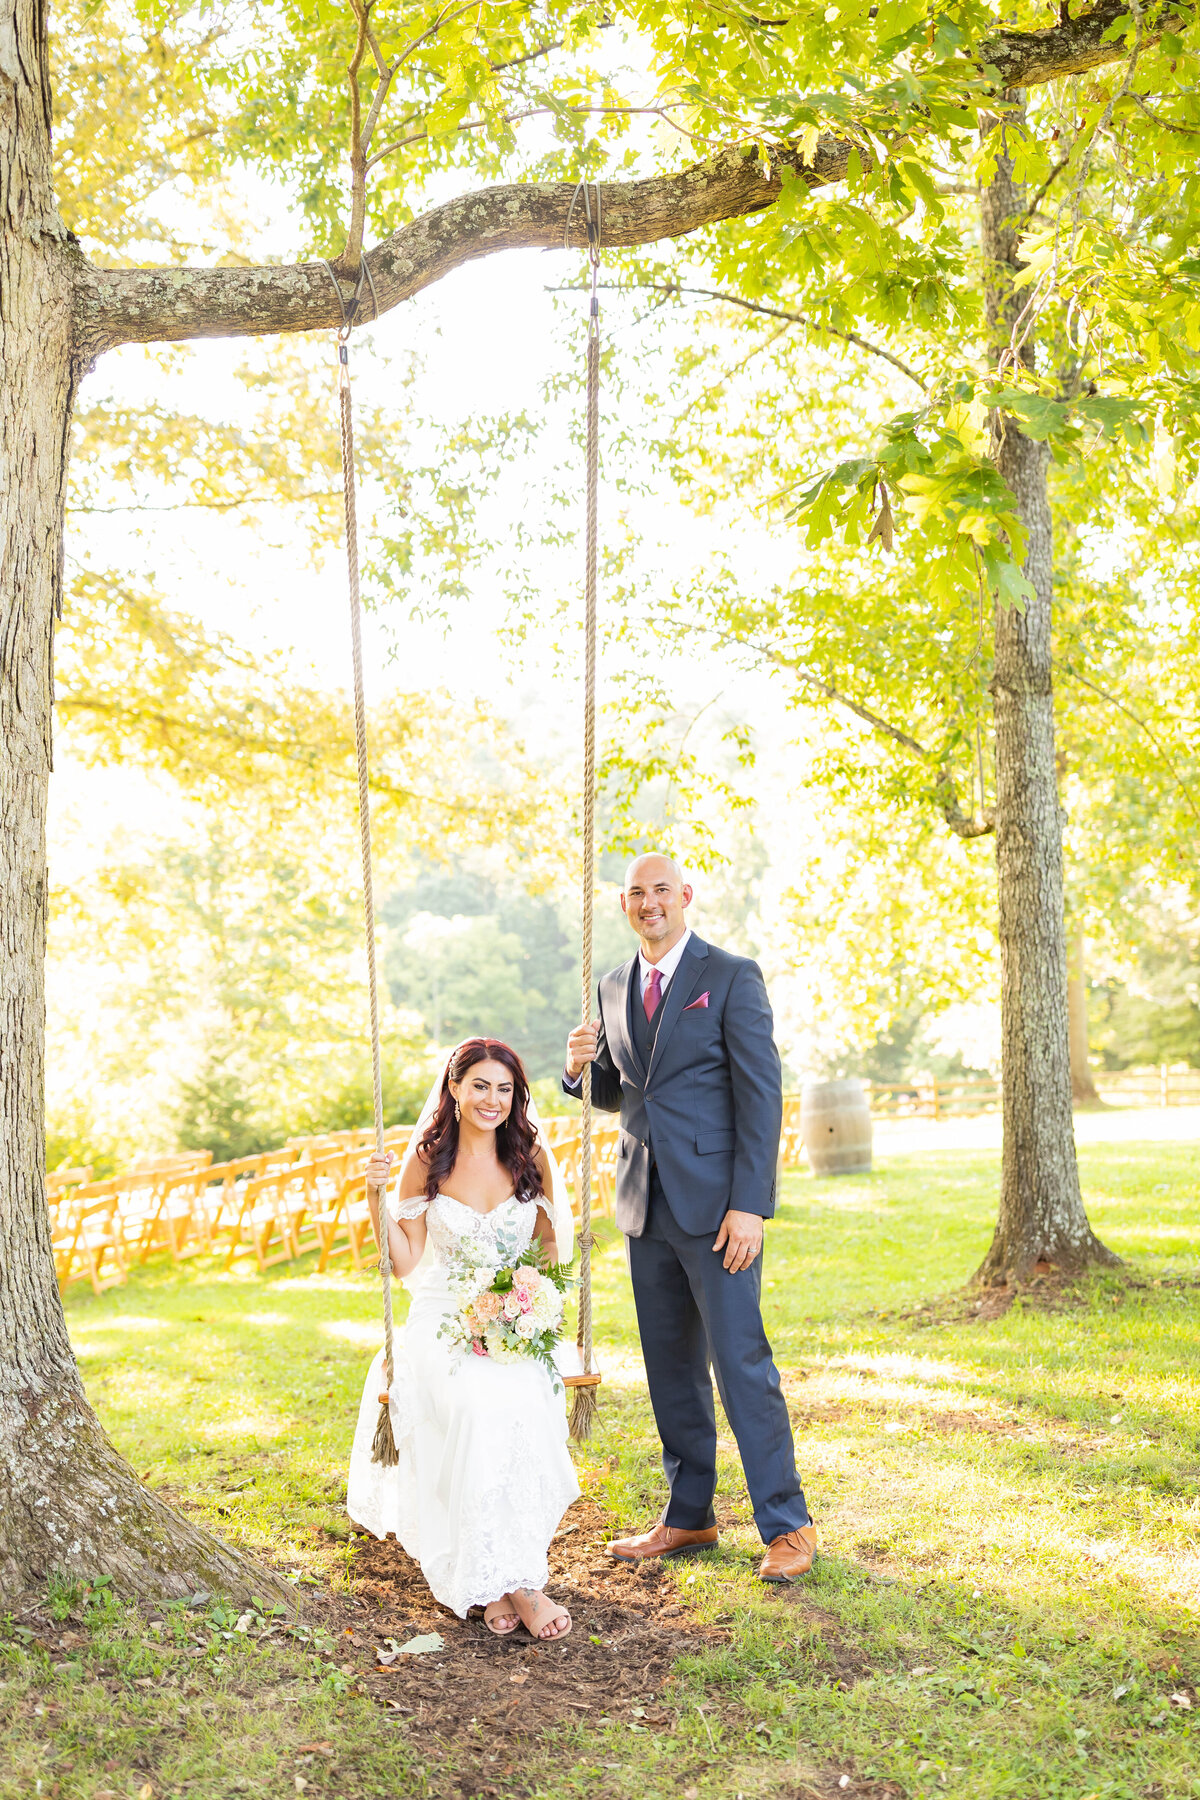 Bride poses on swing alongside groom by Tiffany McFalls.